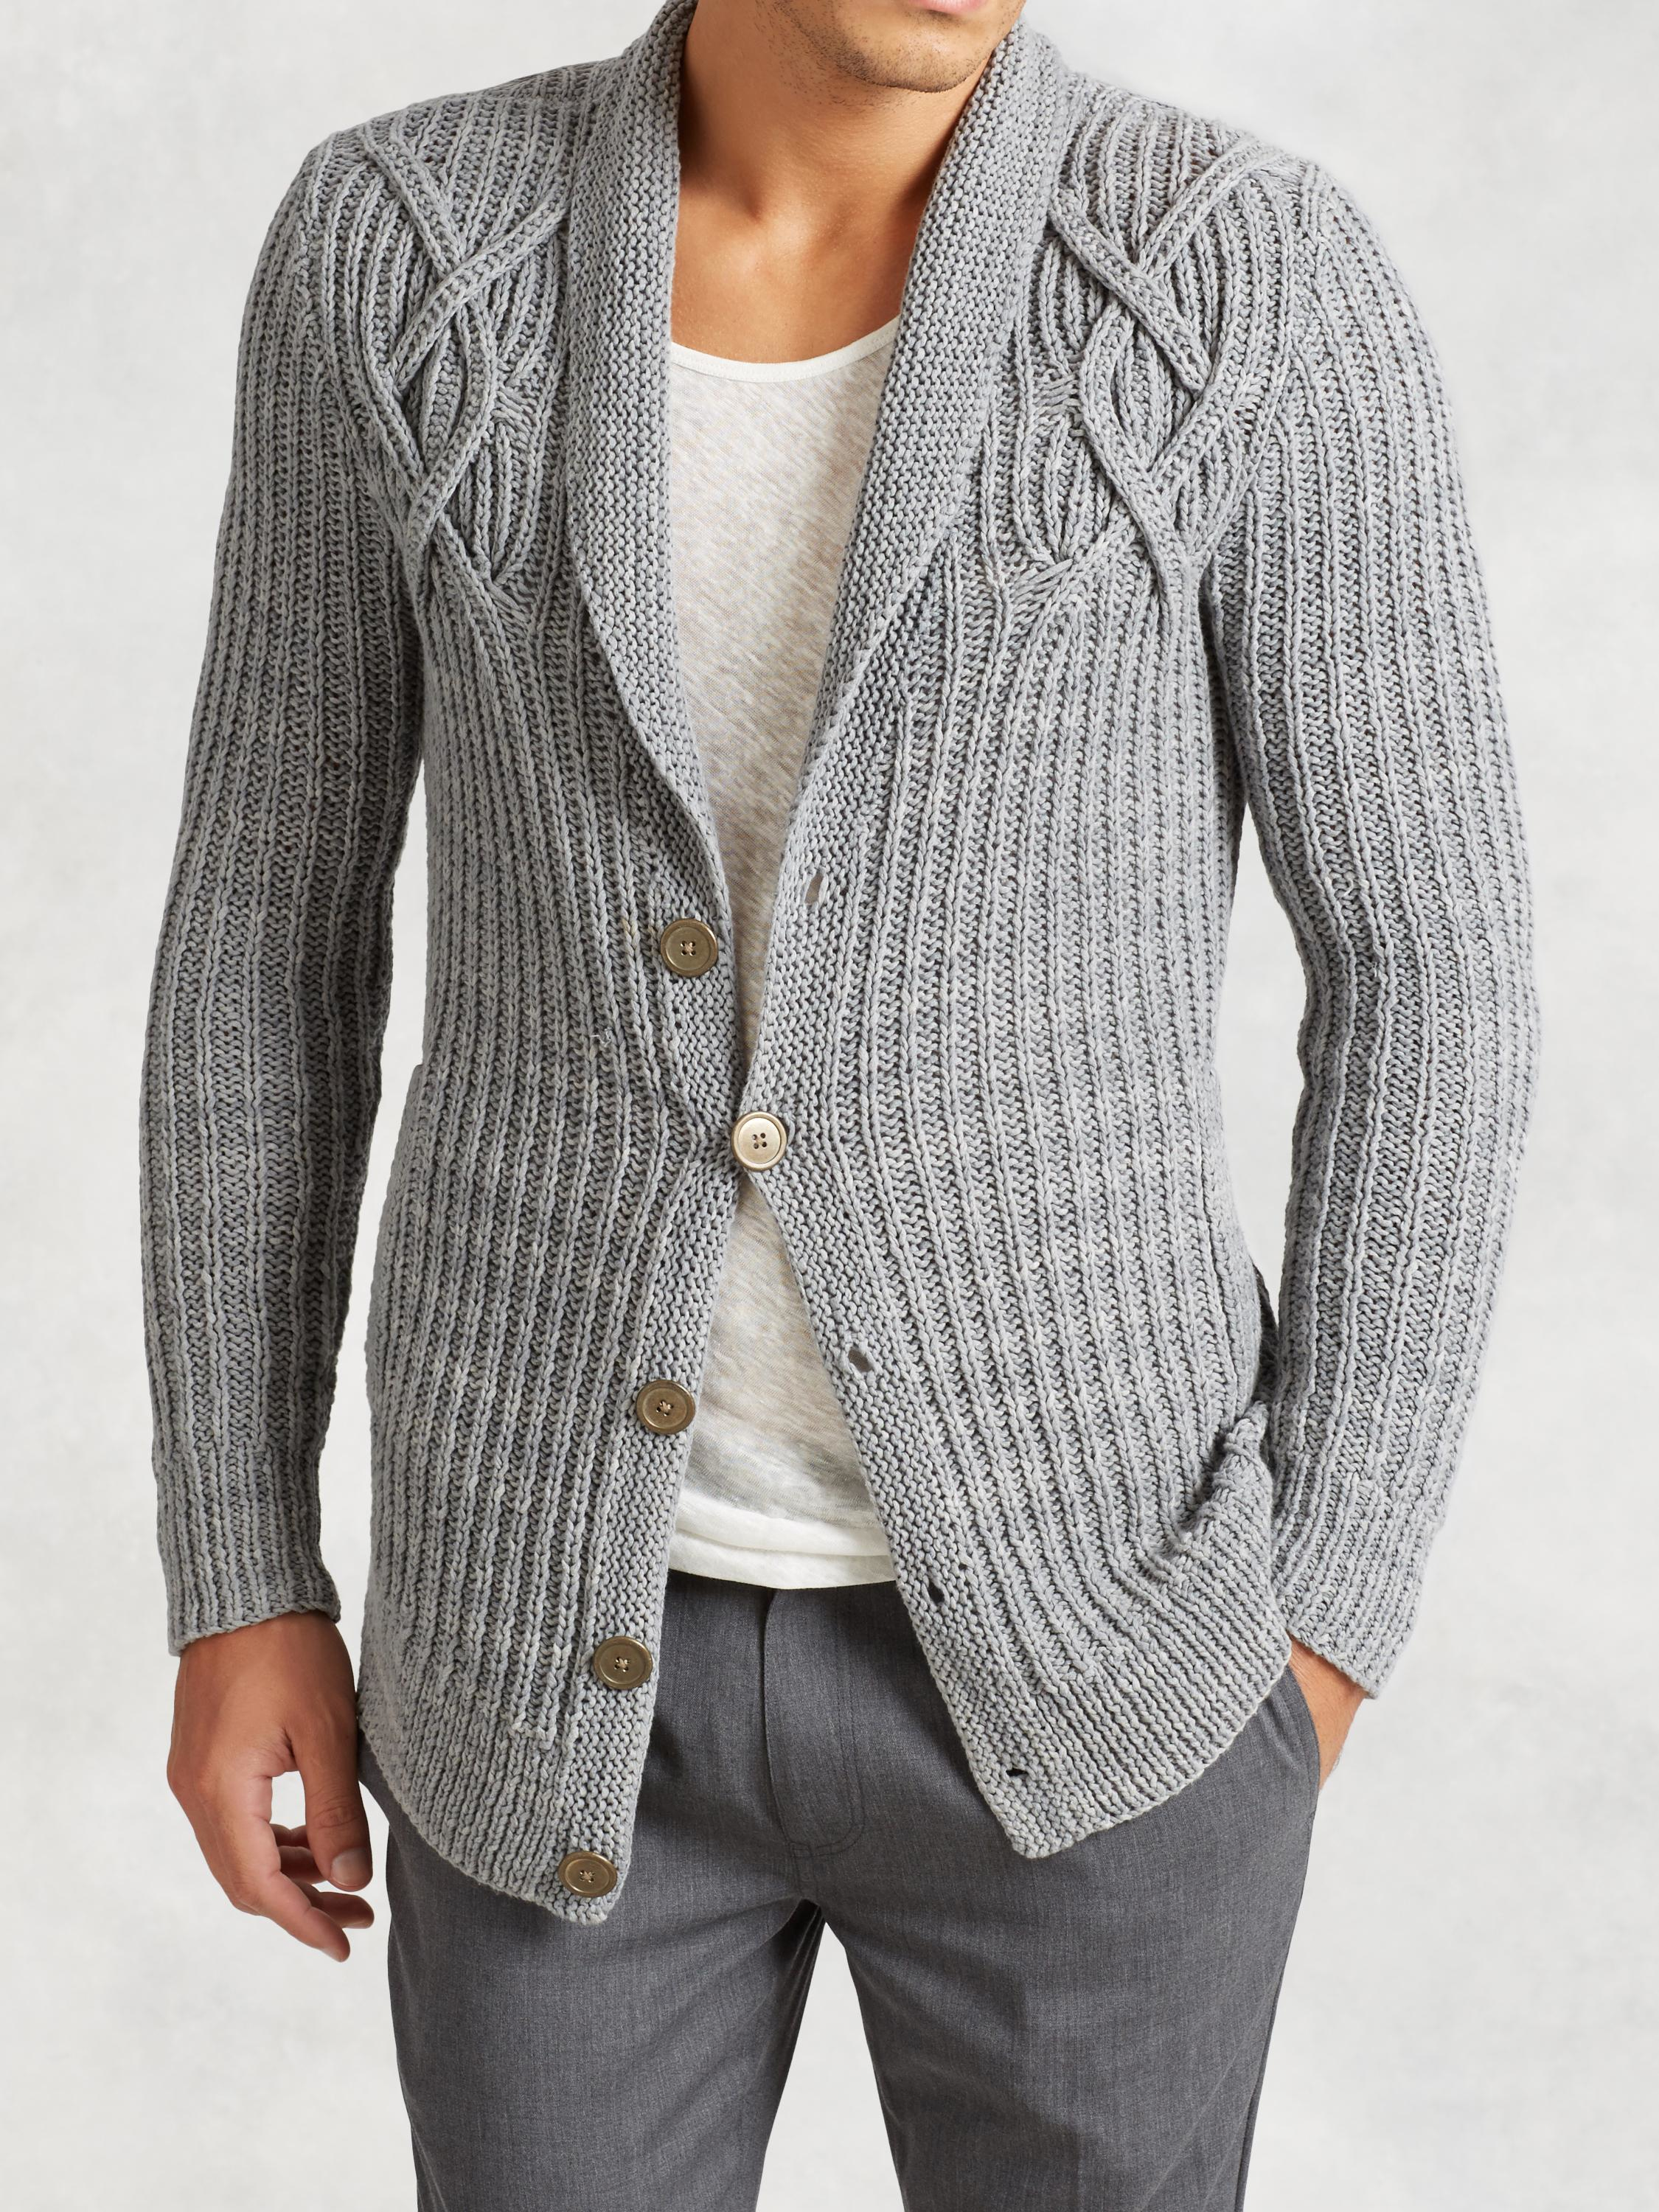 Lyst - John Varvatos Artisan Cable Knit Cardigan in Gray for Men